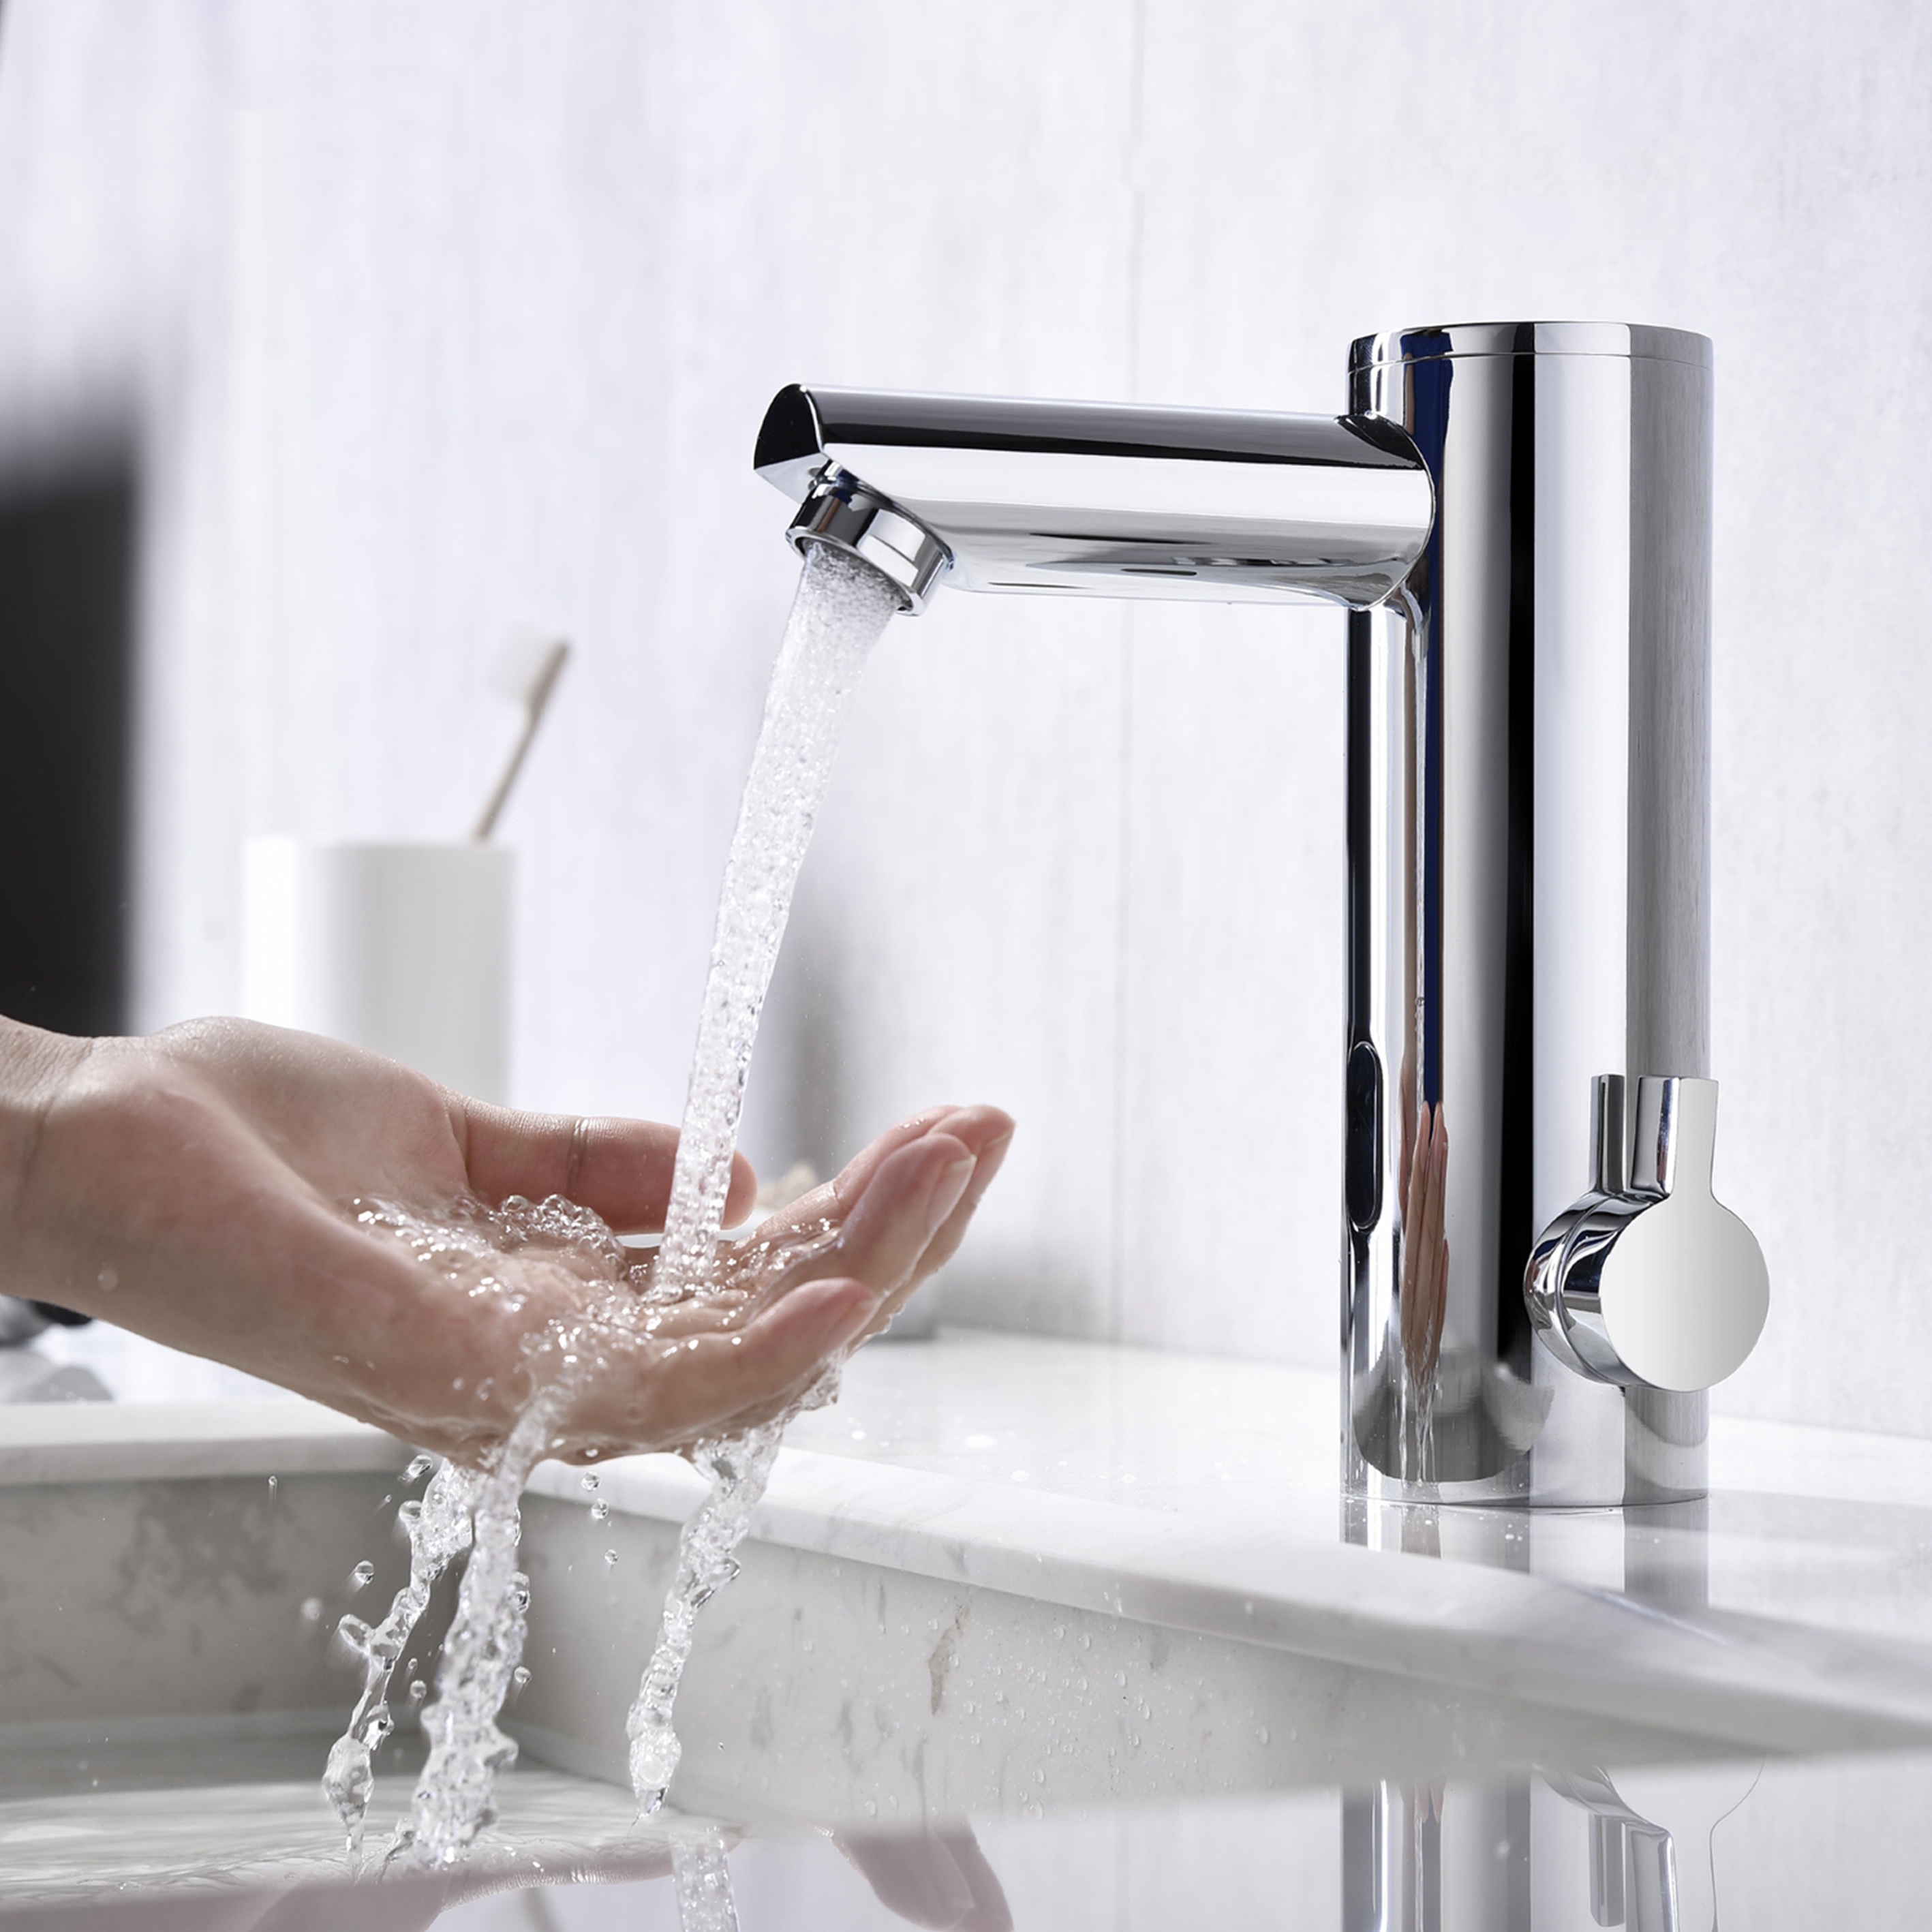 Commercial-Automatic-Hands-Free-Chrome-Faucet